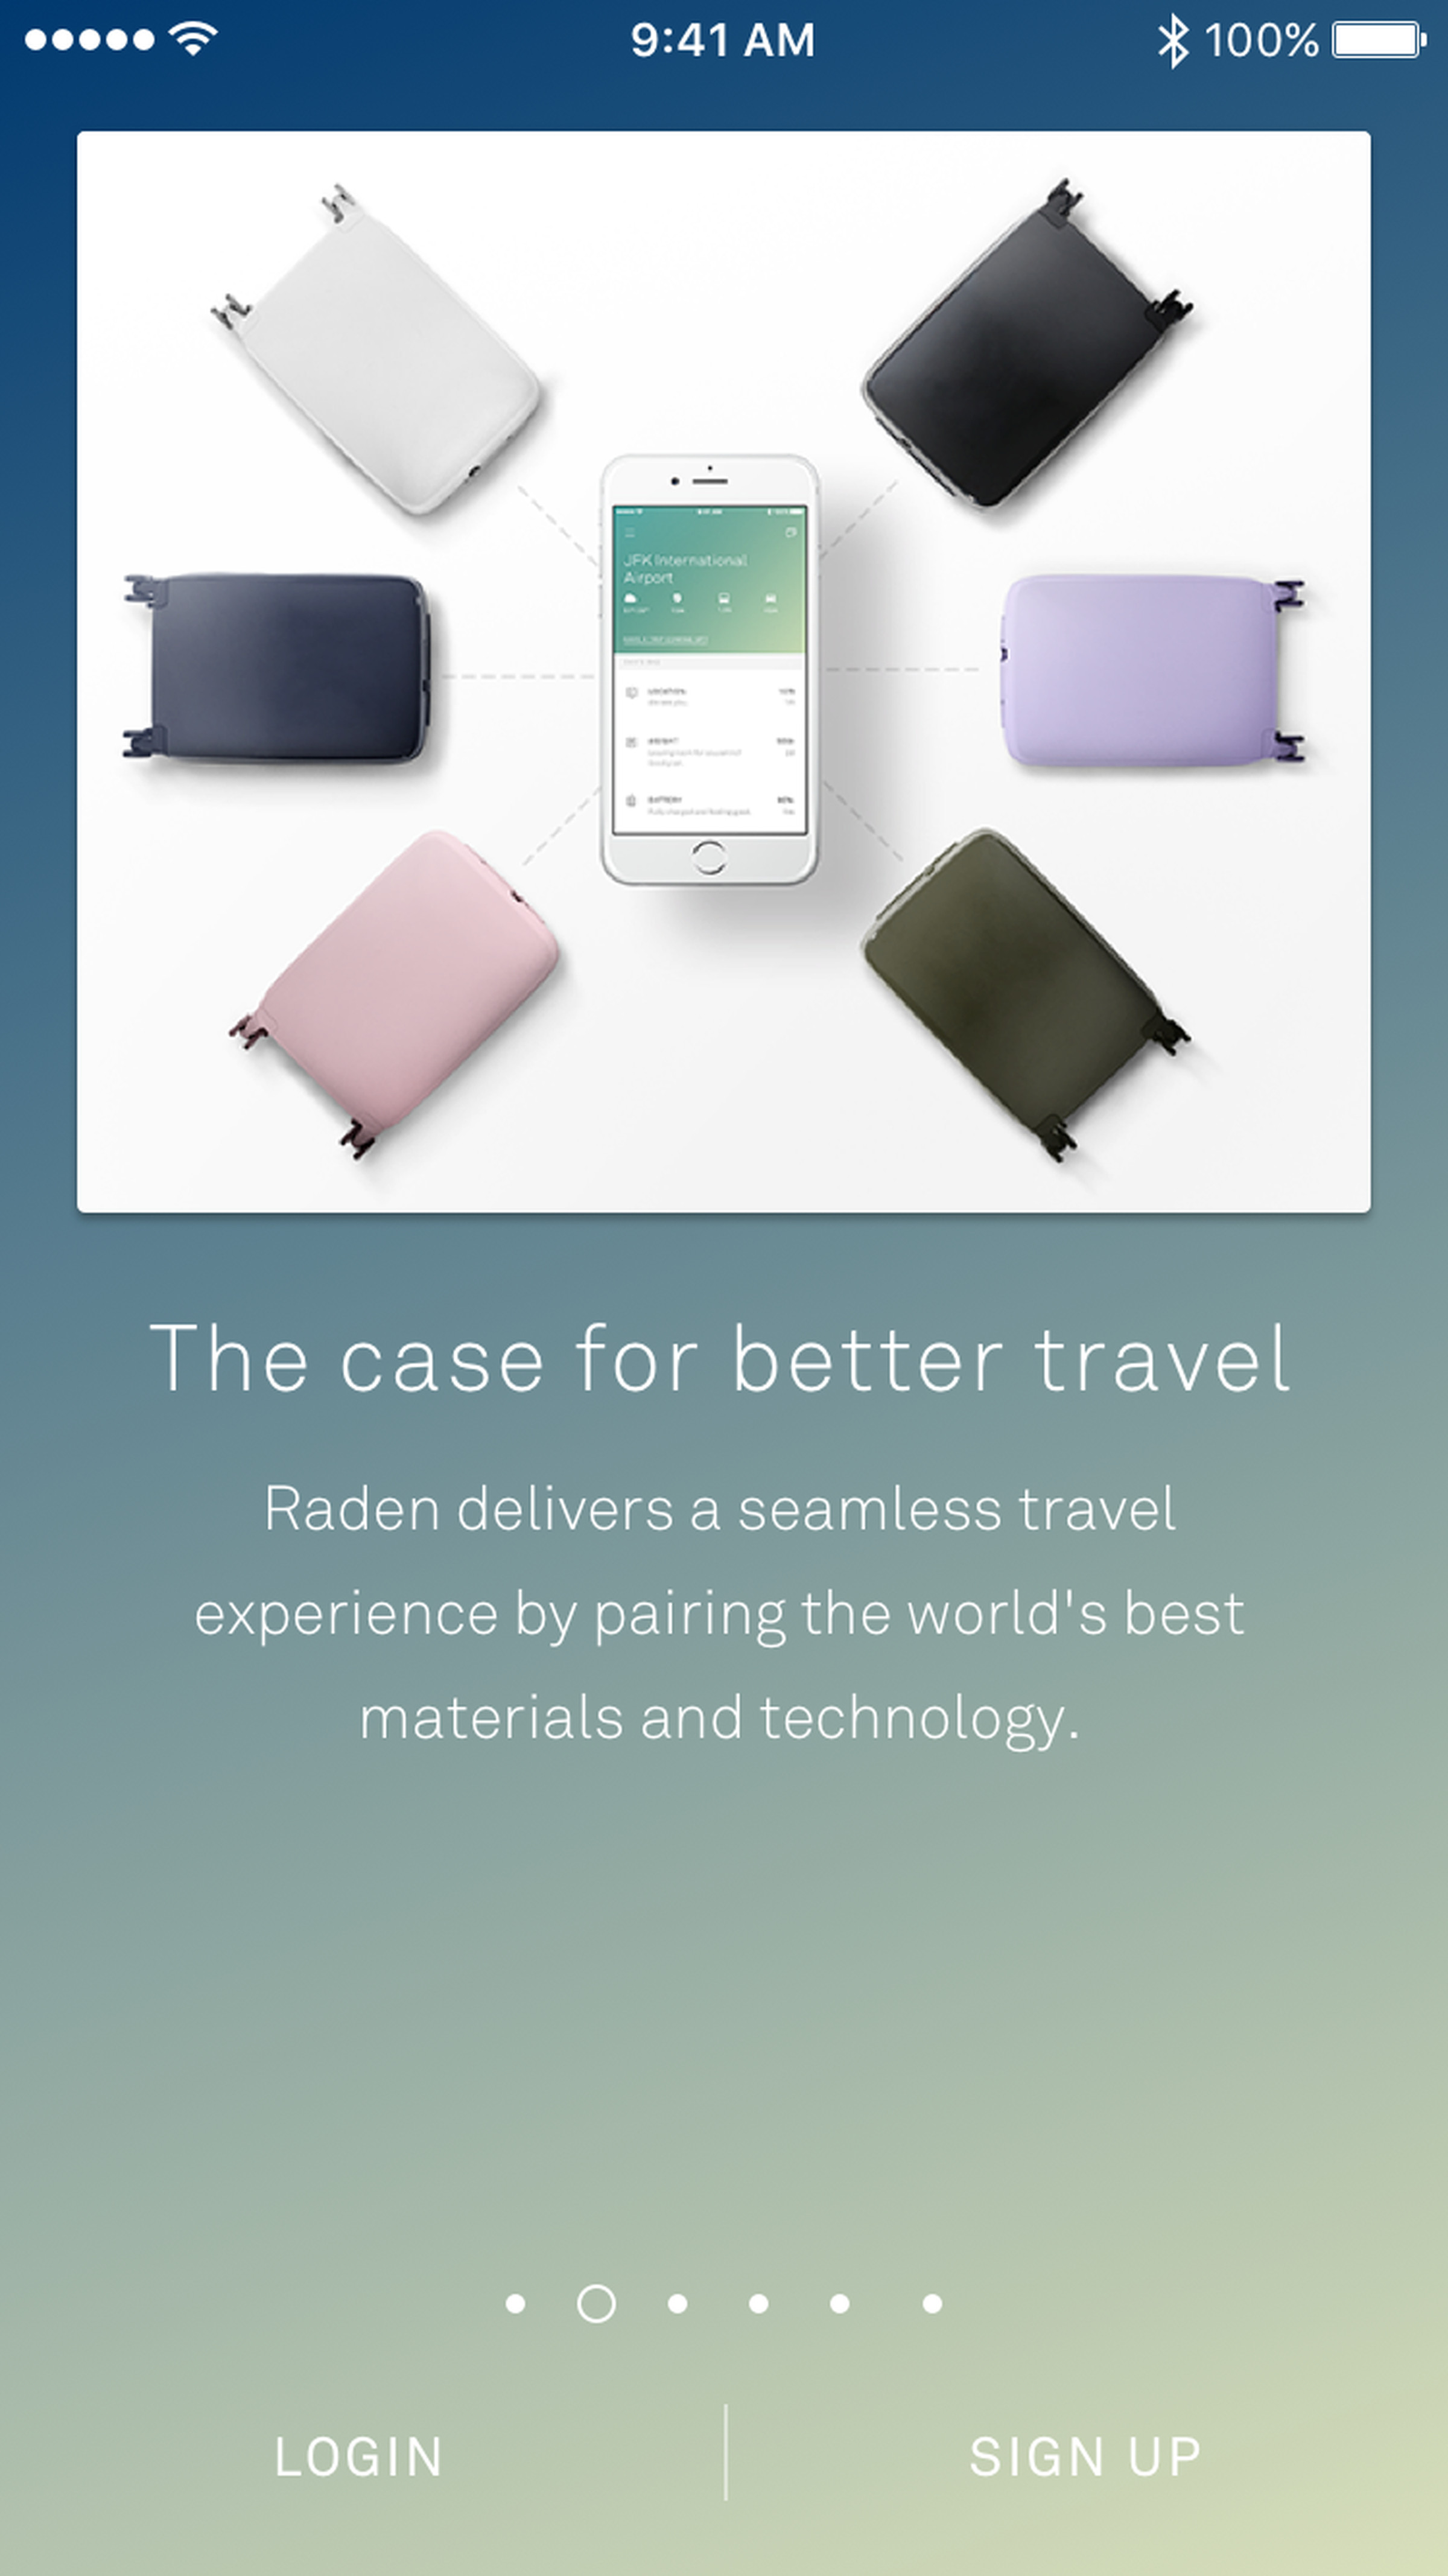 Raden smart luggage app photos